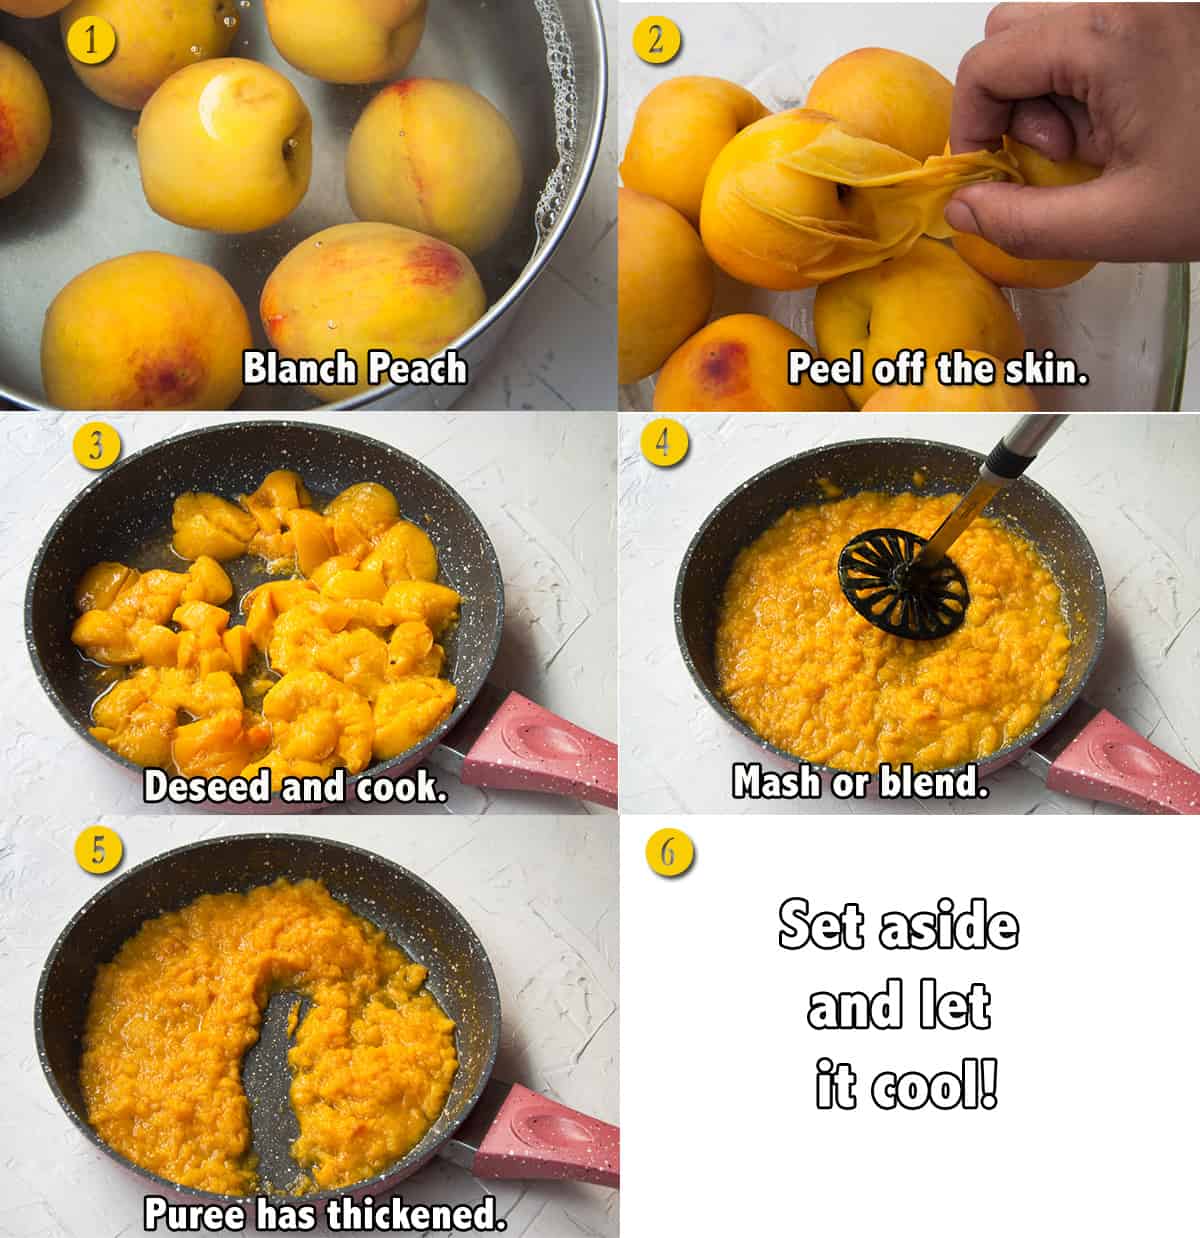 Steps to make peach puree